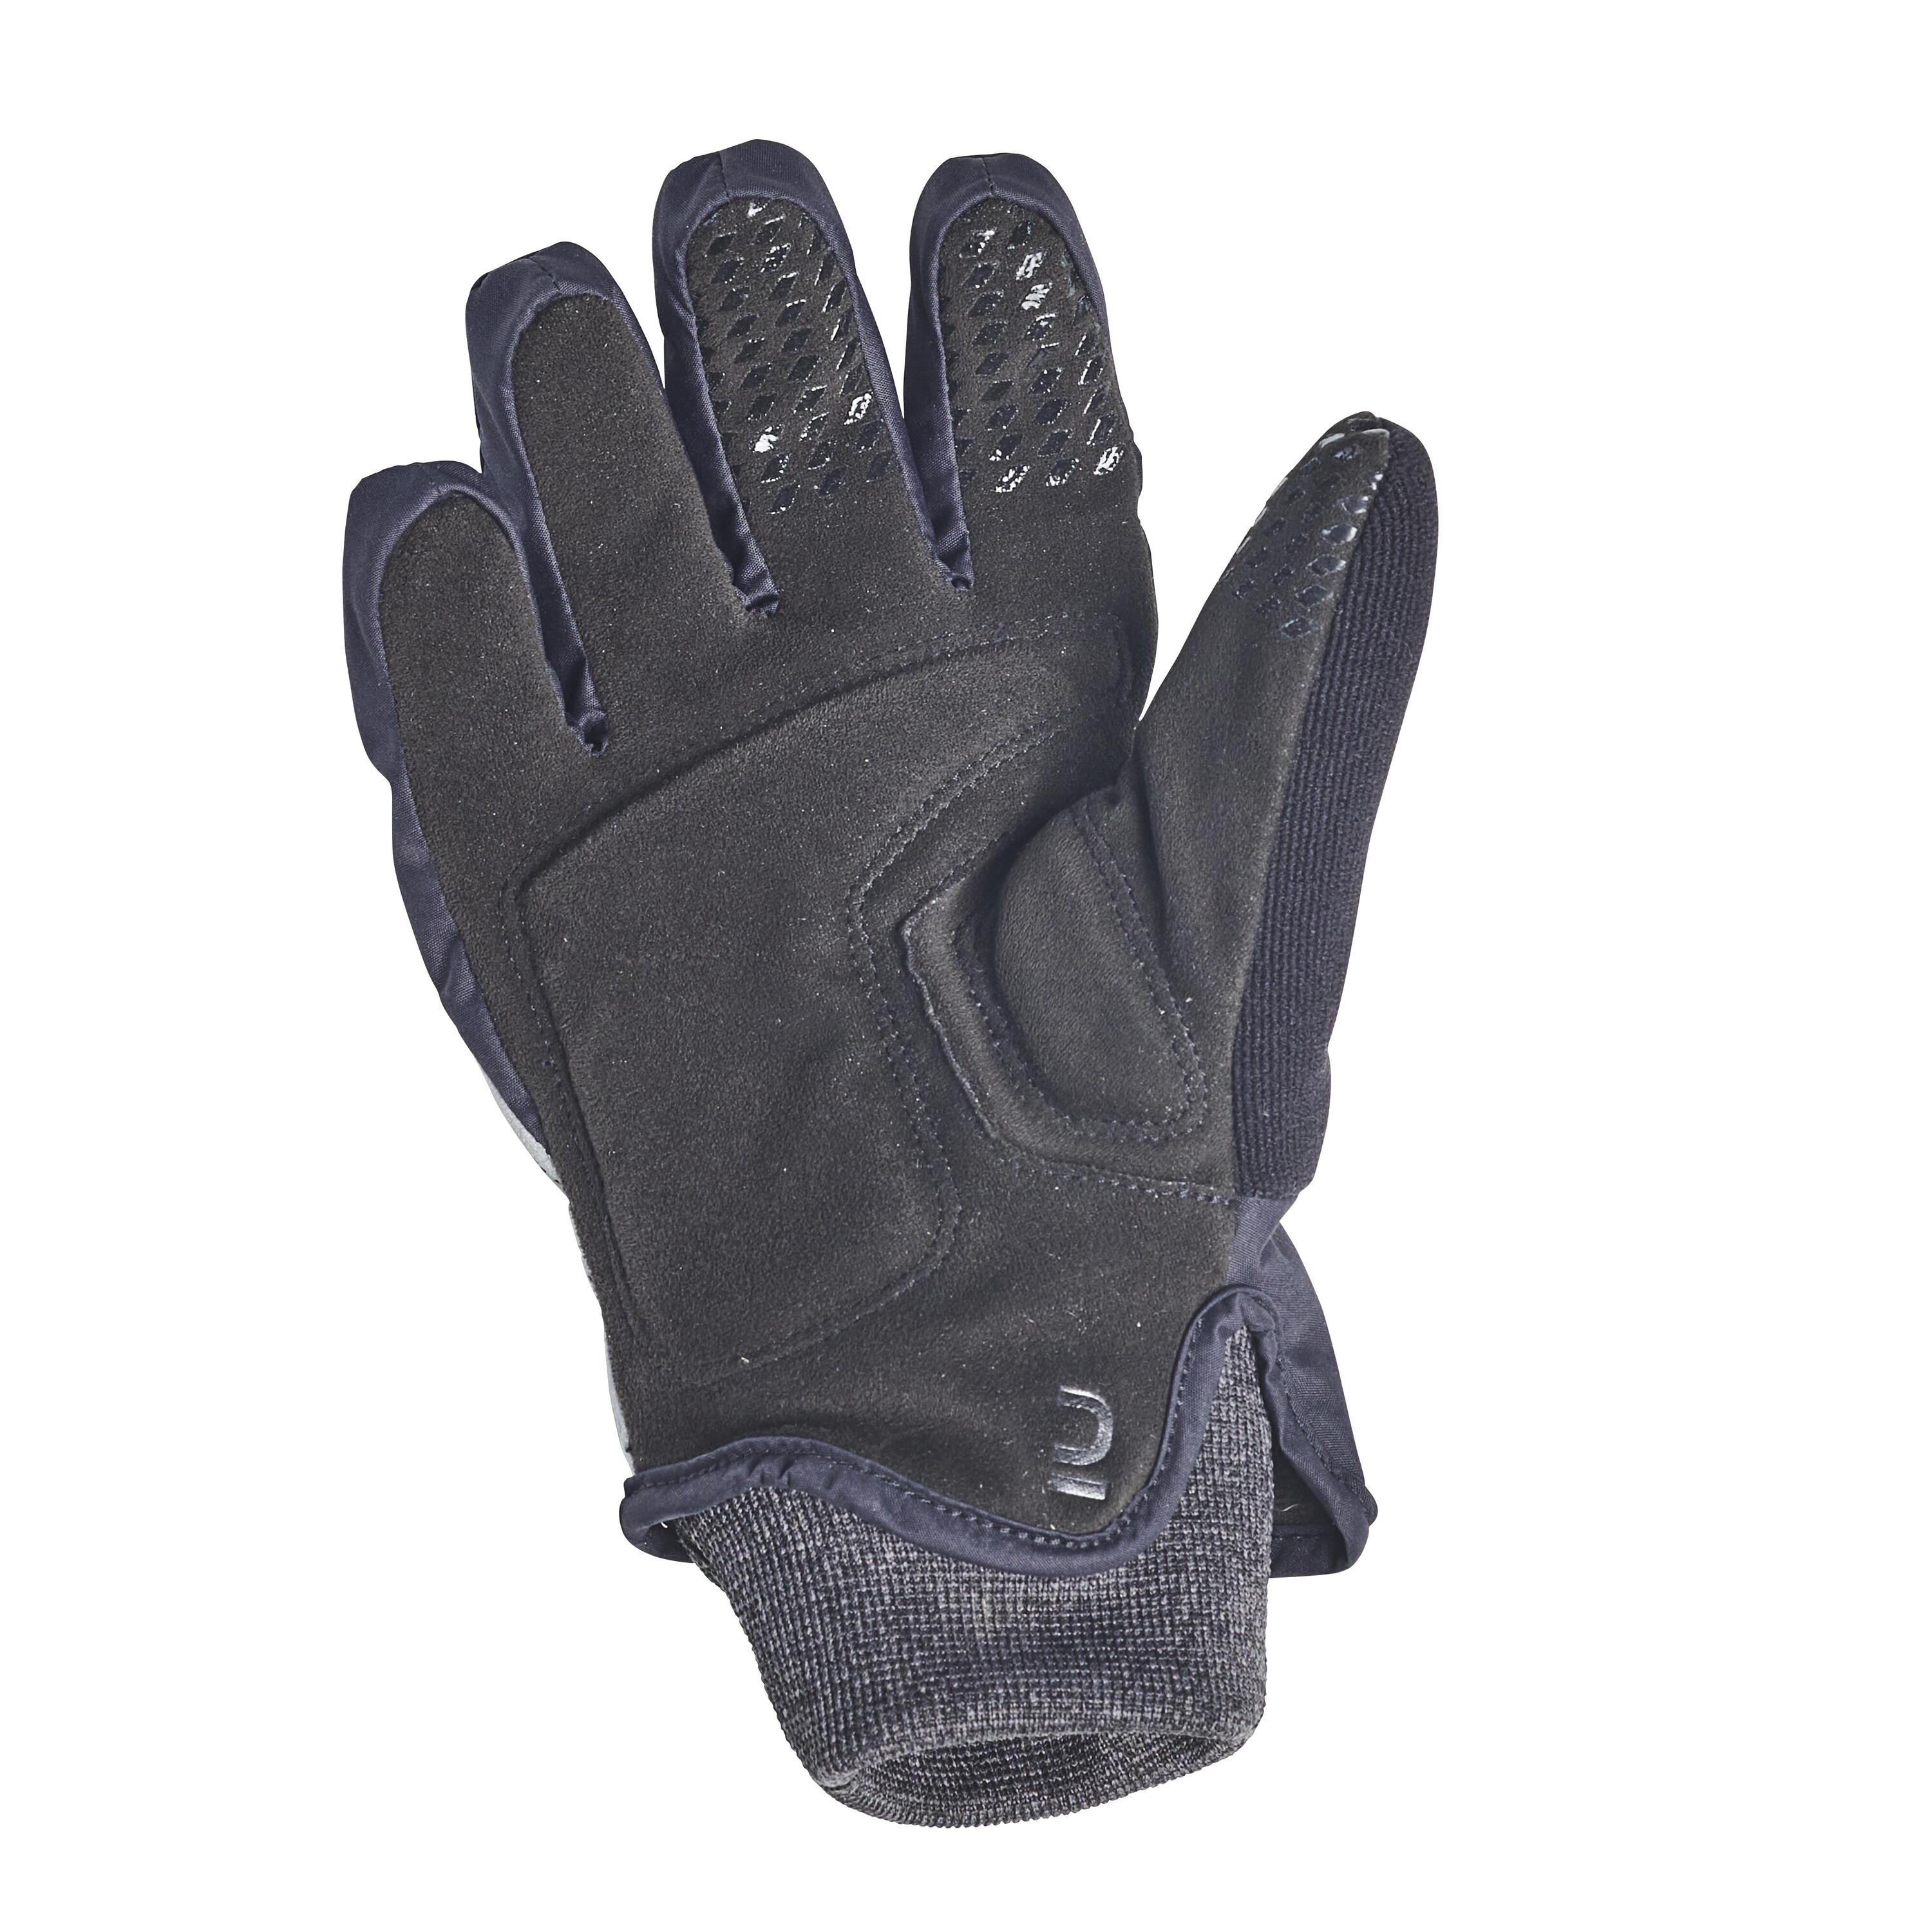 Kids' Winter Cycling Gloves 500 - Black 3/3